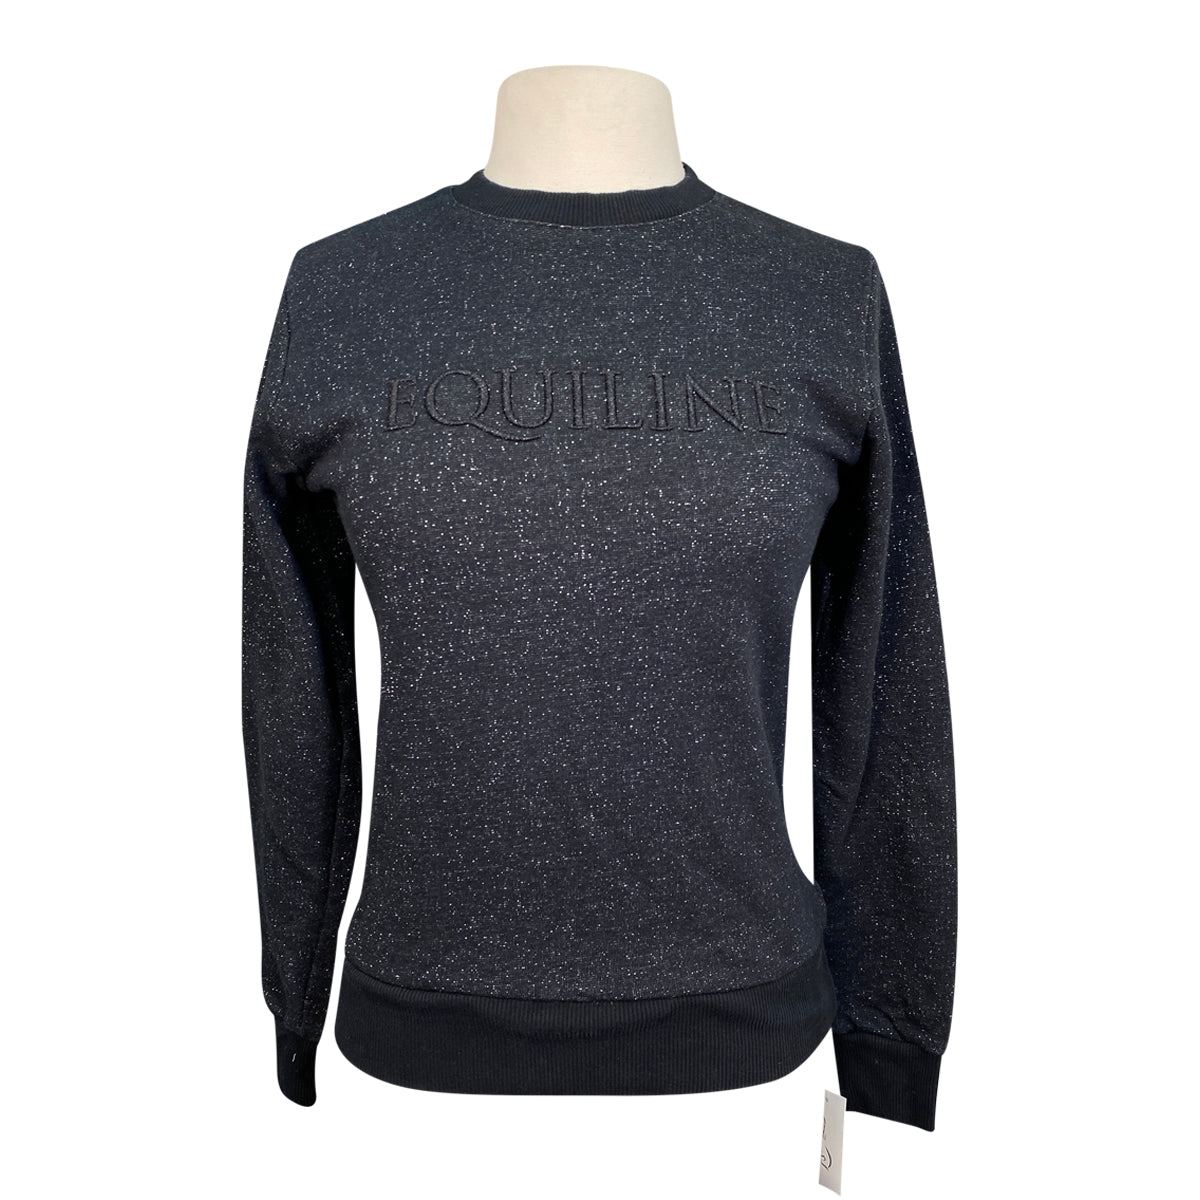 Equiline 'GerseG' Lurex Sweatshirt in Black